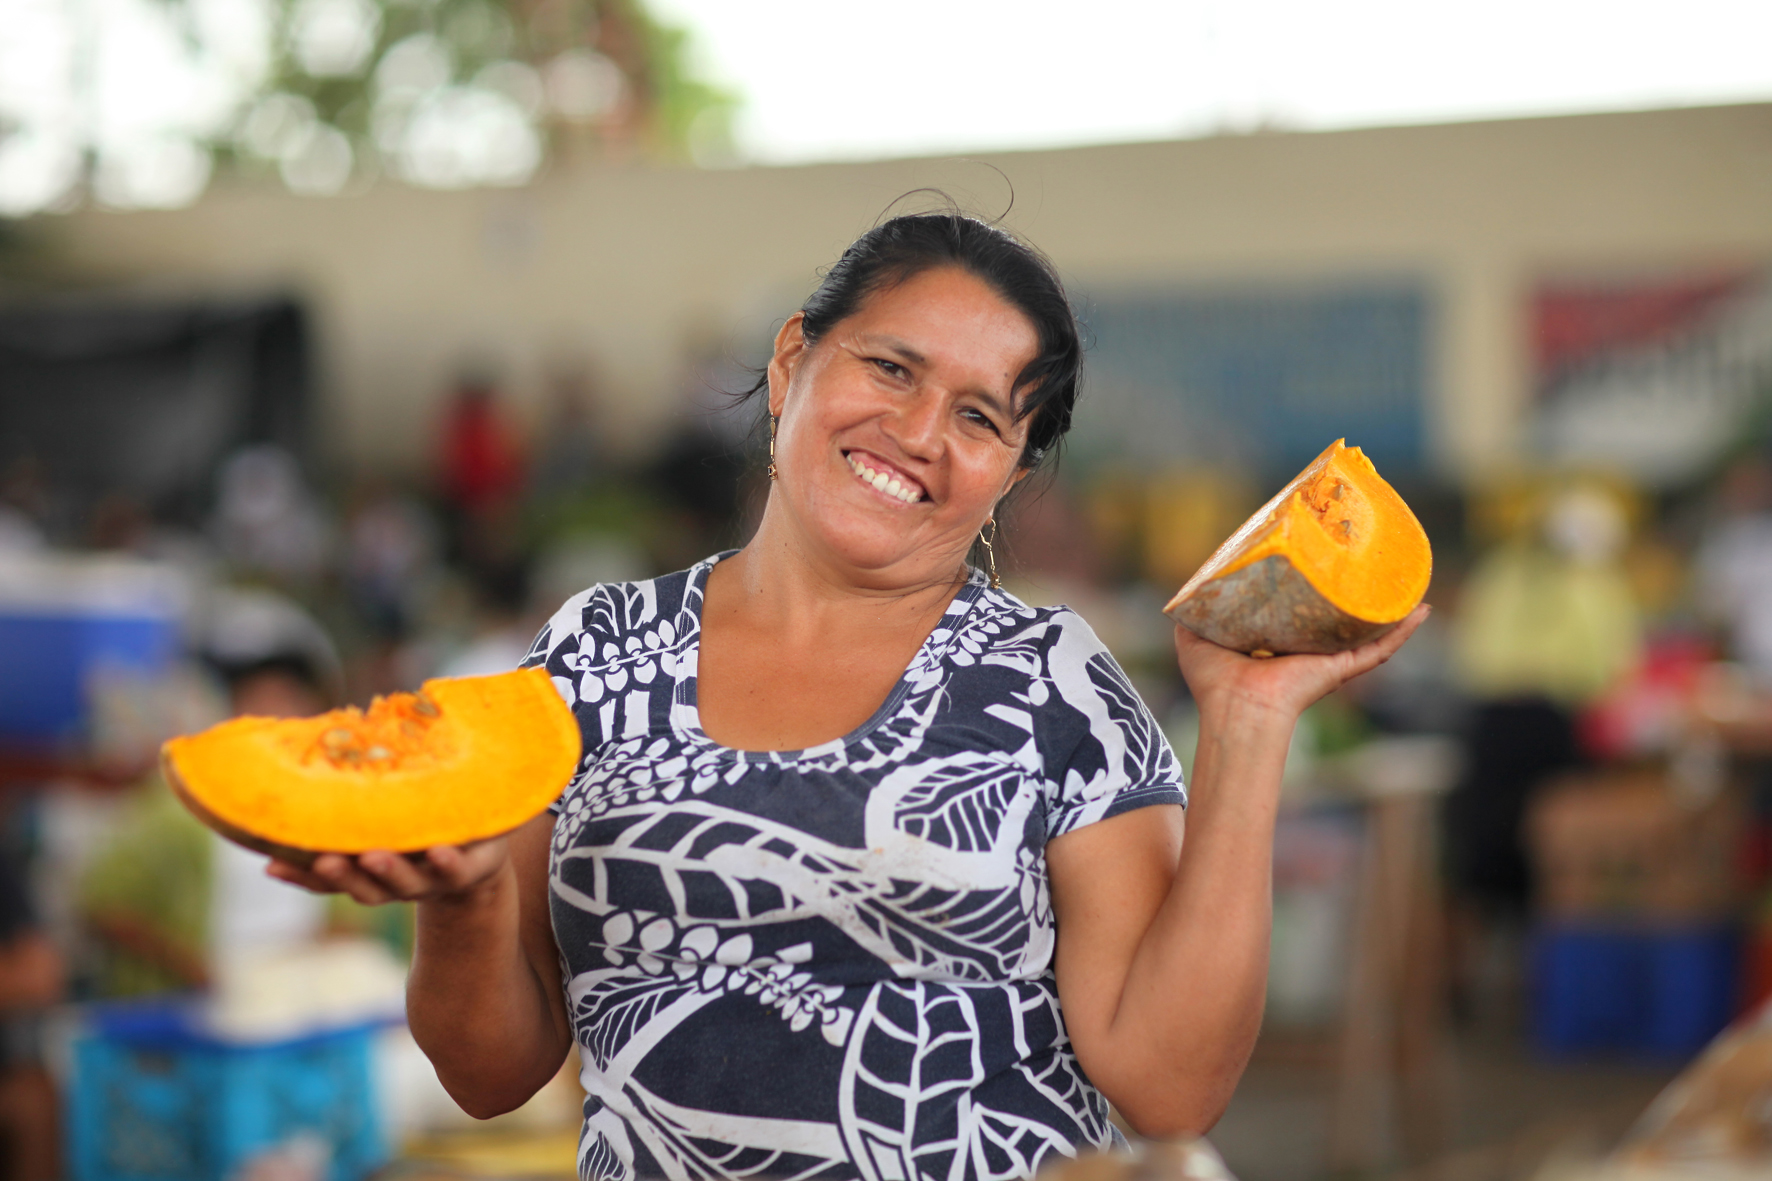 A Heifer participant holds up fruit